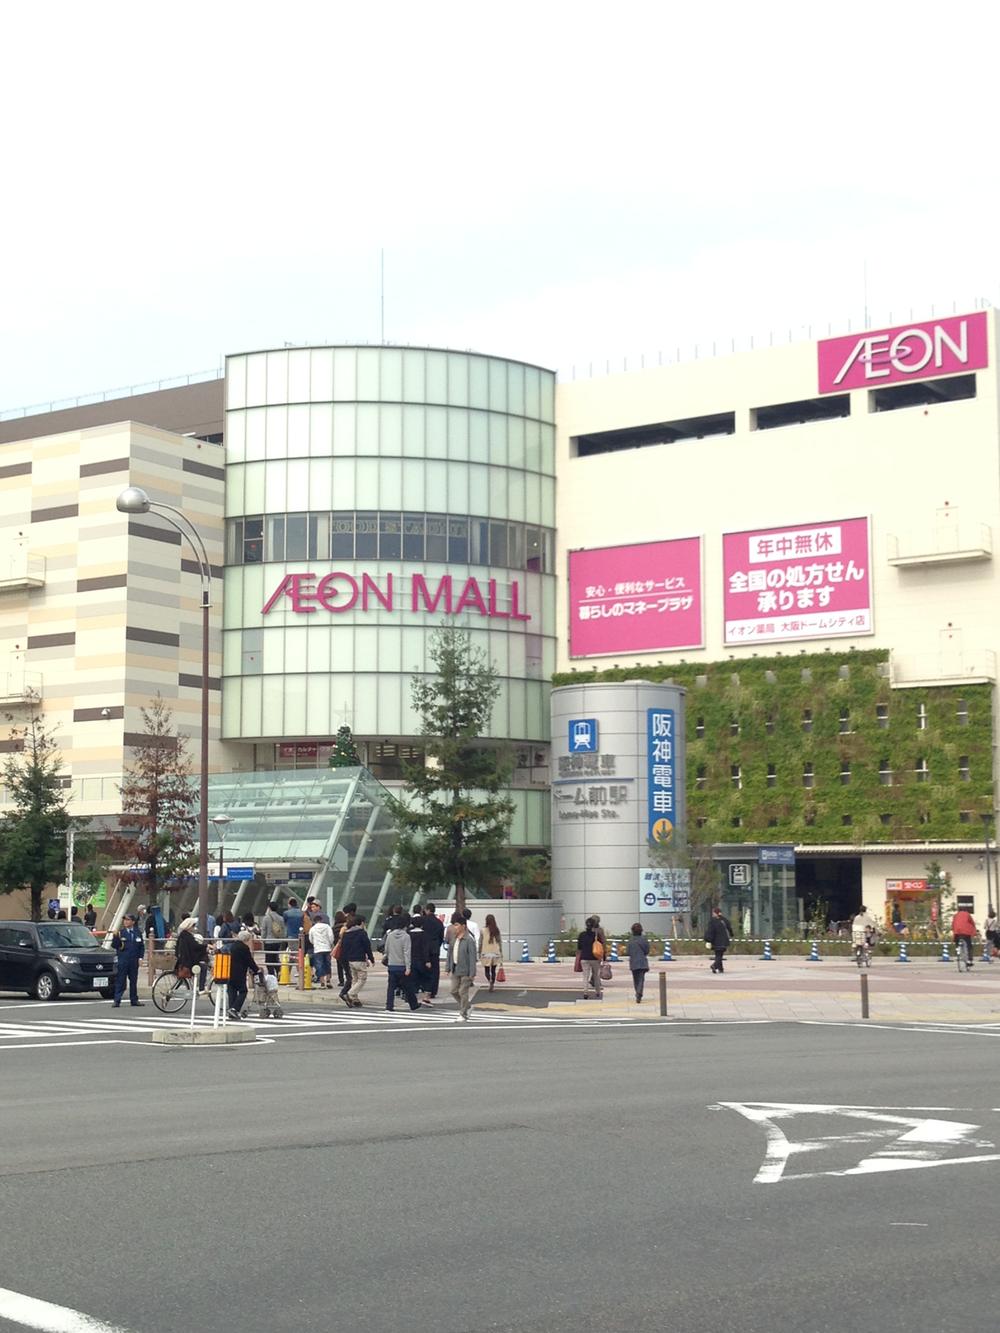 Shopping centre. 779m to Aeon Mall Osaka Dome City